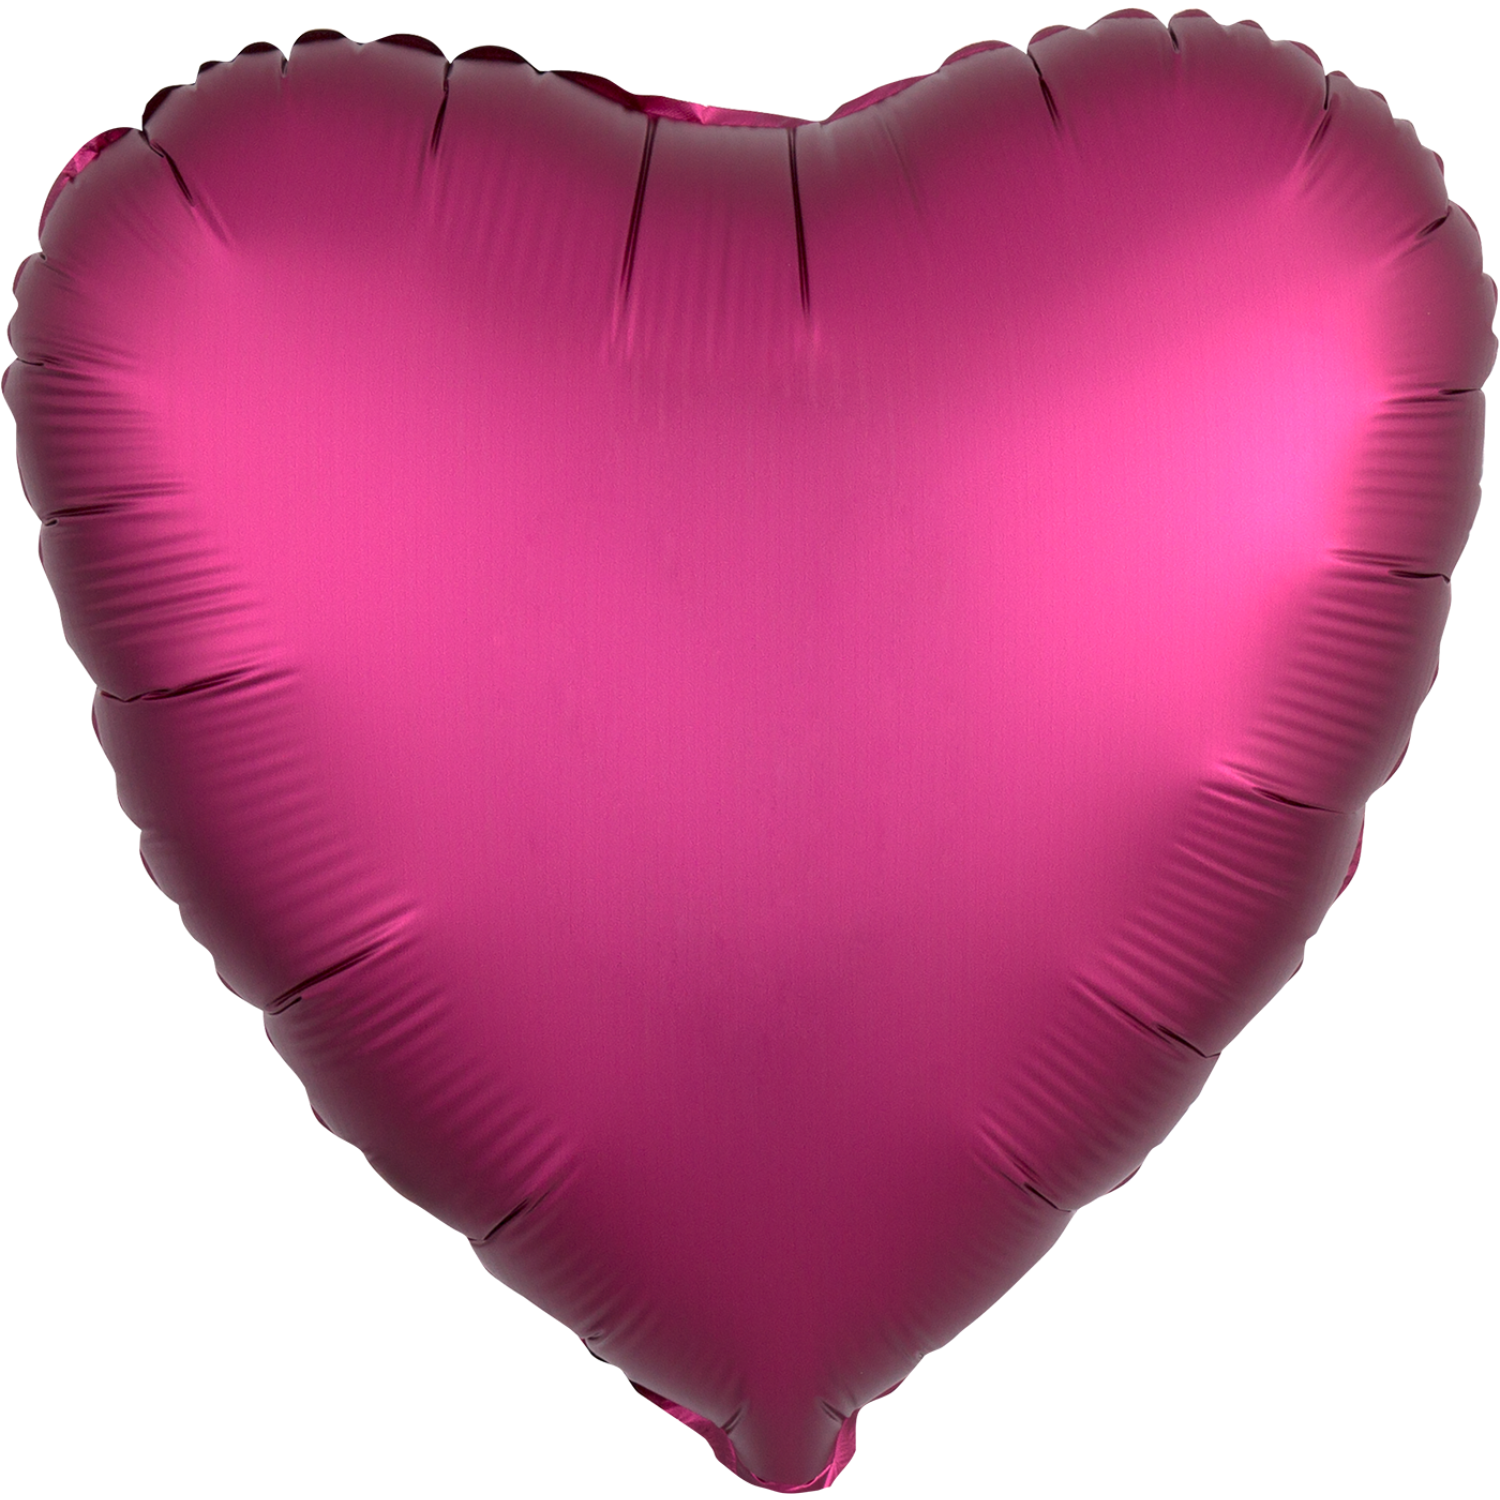 http://images.officebrain.com/migration-api-hidden-new/web/images/626/myrn-heart-pomegranate-pink.png